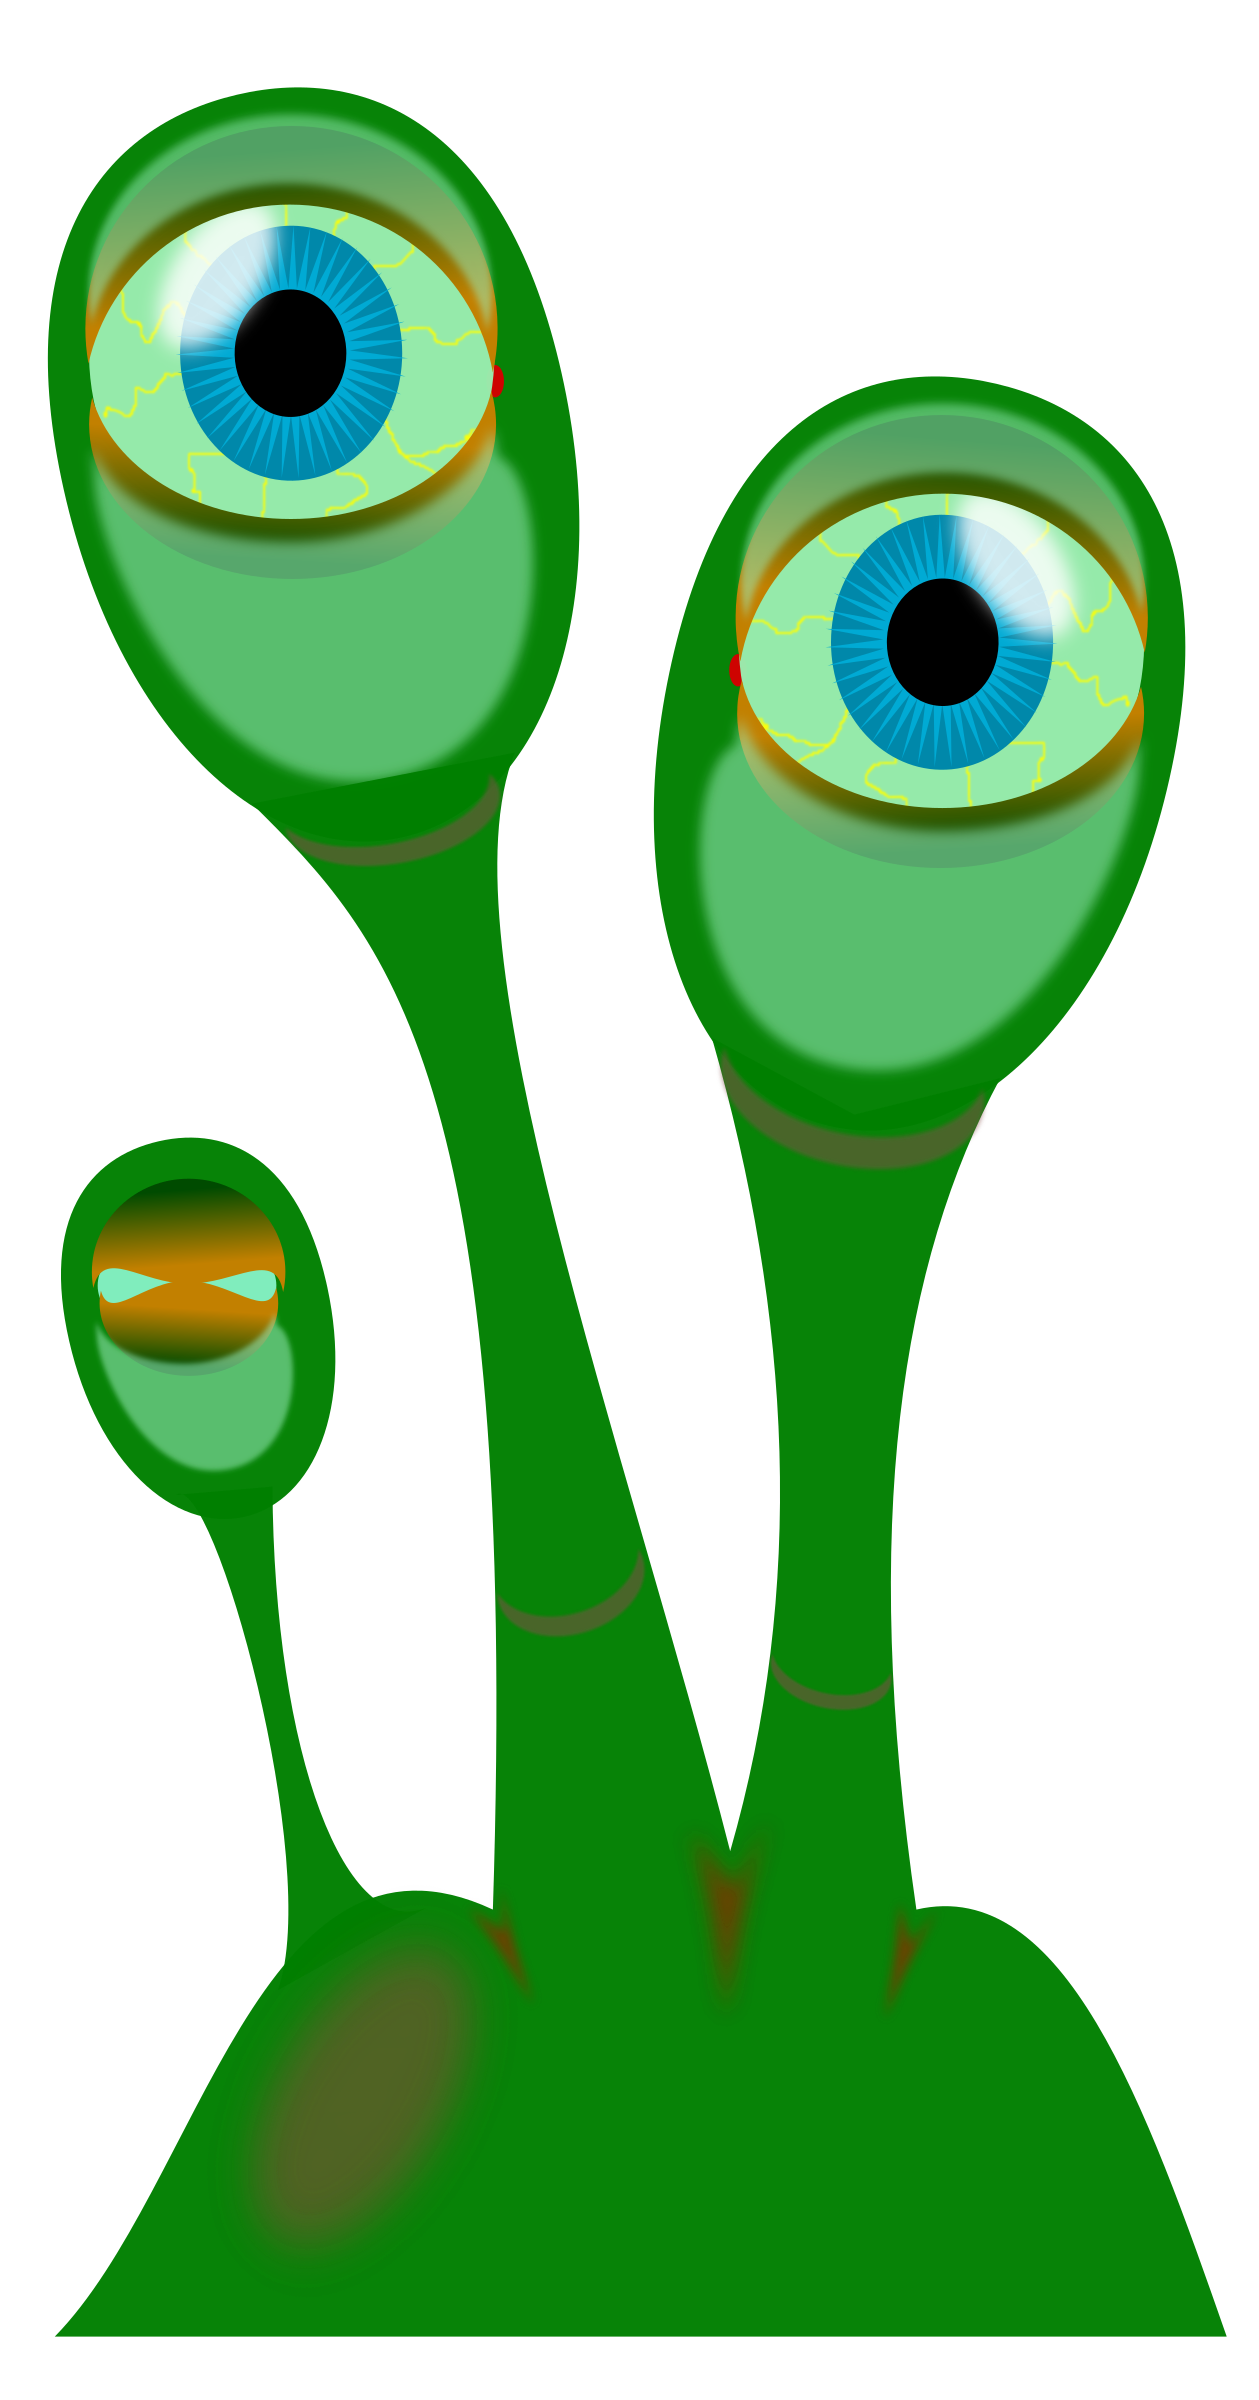 Eyeballs clipart alien. Extraterrestrial eye plant big